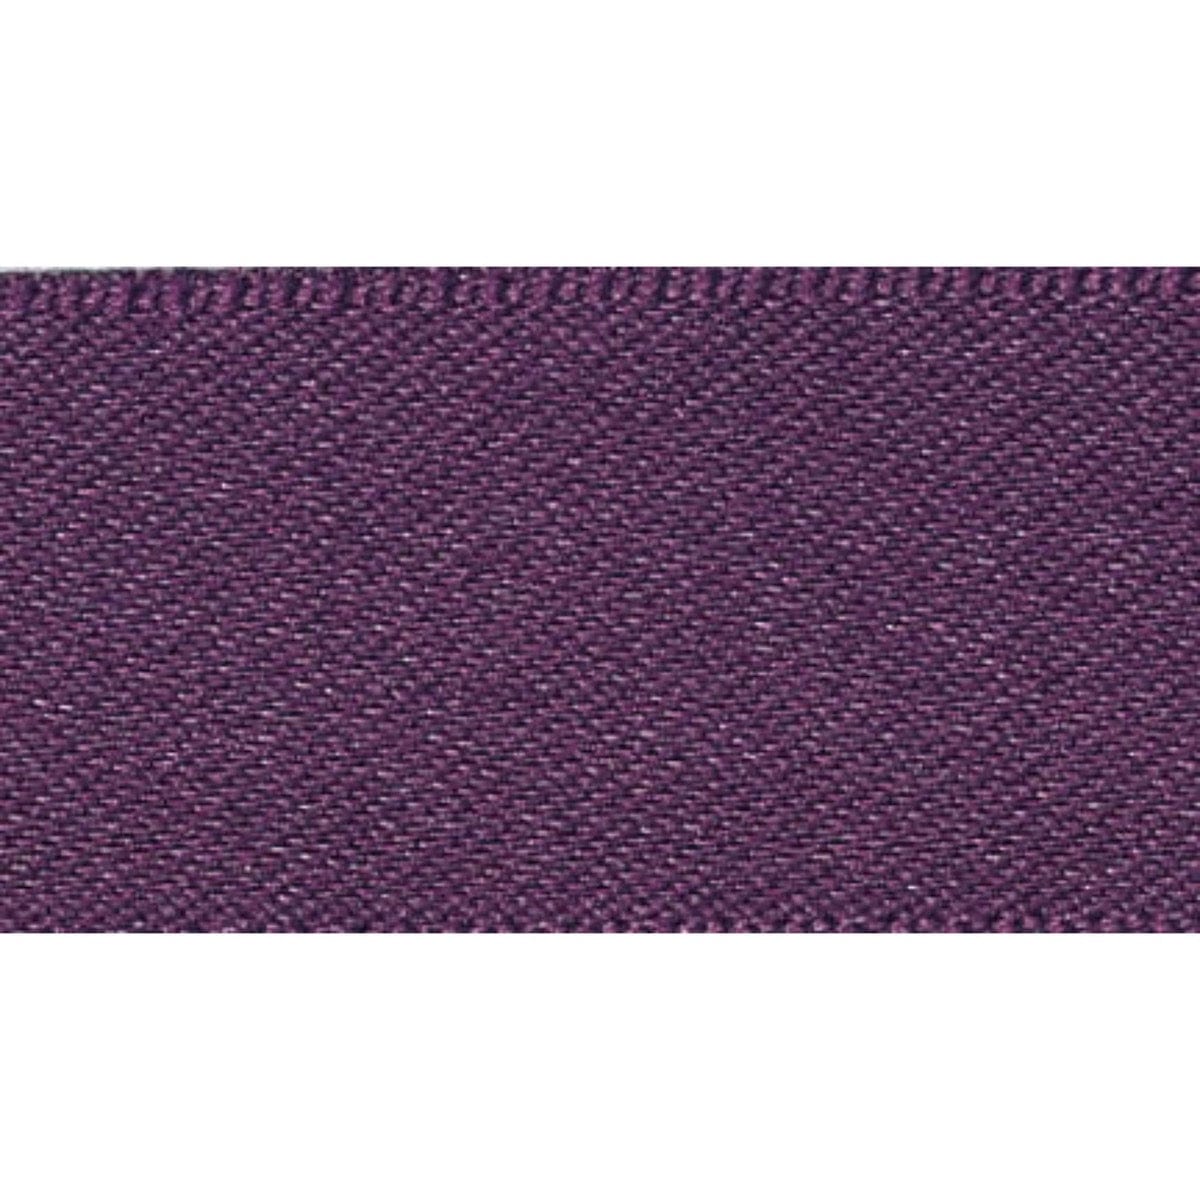 Double Faced Satin Ribbon: Blackberry Purple: 15mm wide. Price per metre.